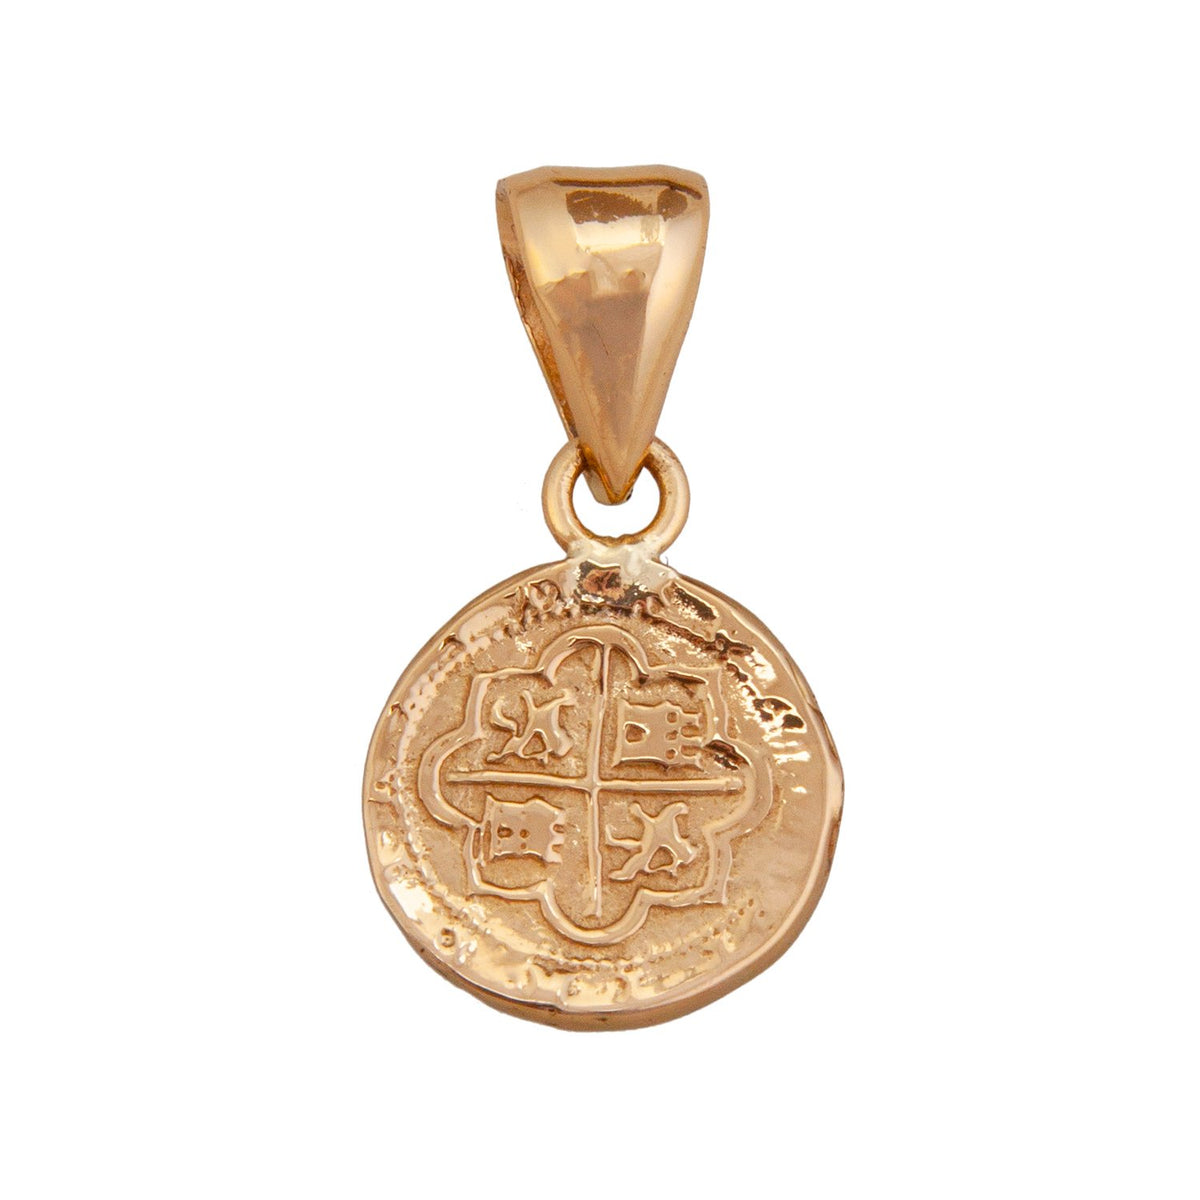 Alchemia Replica Spanish Coin Pendant | Charles Albert Jewelry